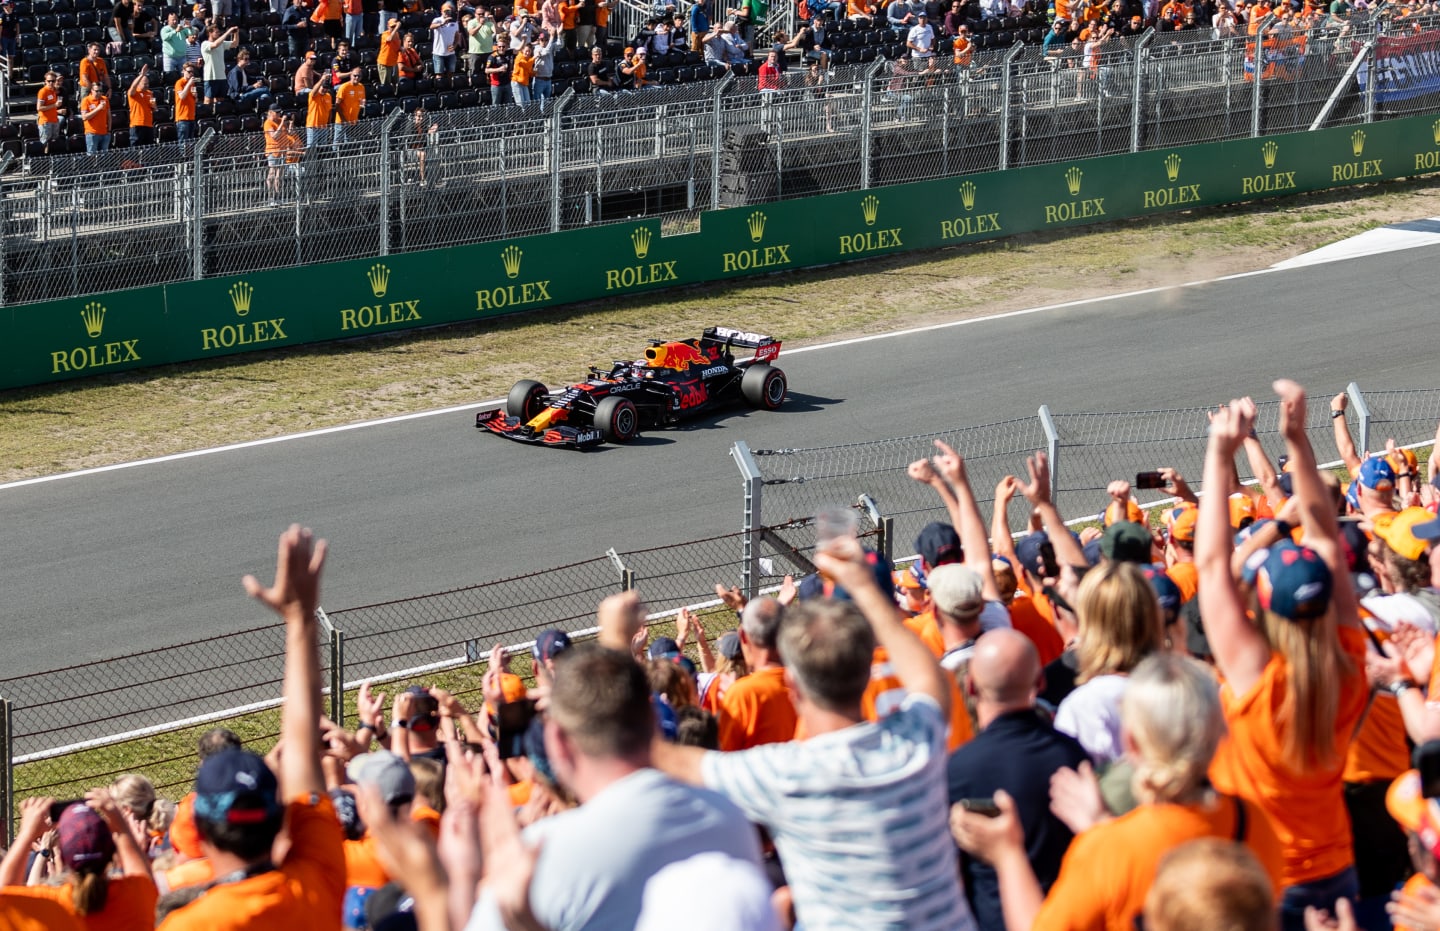 ZANDVOORT, NETHERLANDS - SEPTEMBER 04: Fans celebrate Max Verstappen of the Netherlands driving the